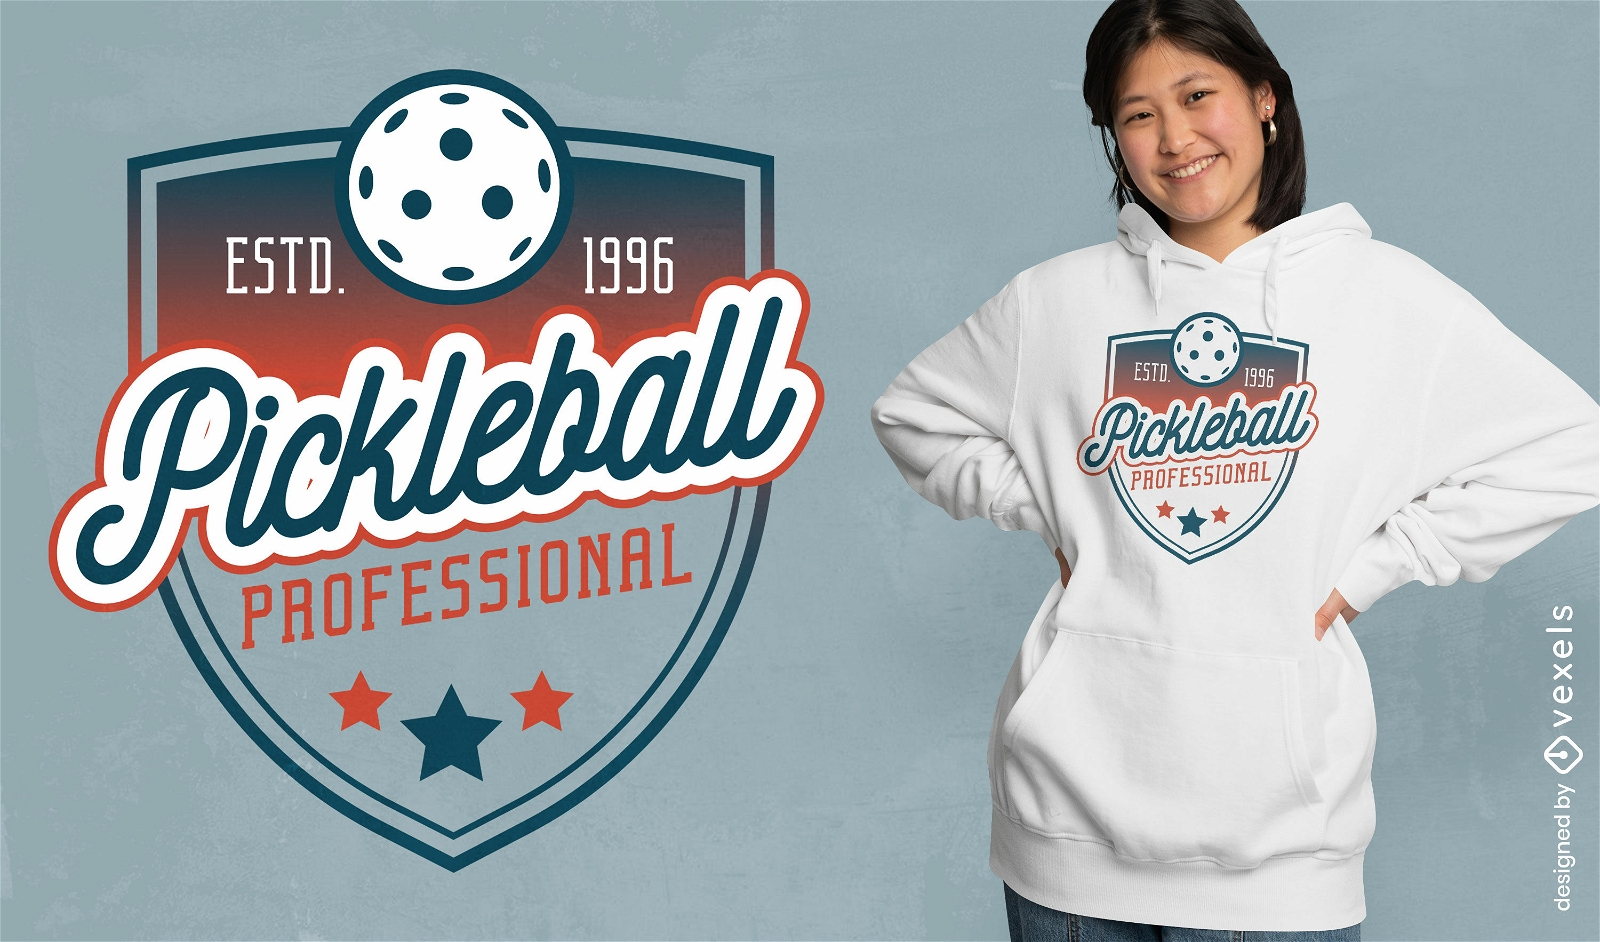 Pickball-Profi-T-Shirt-Design